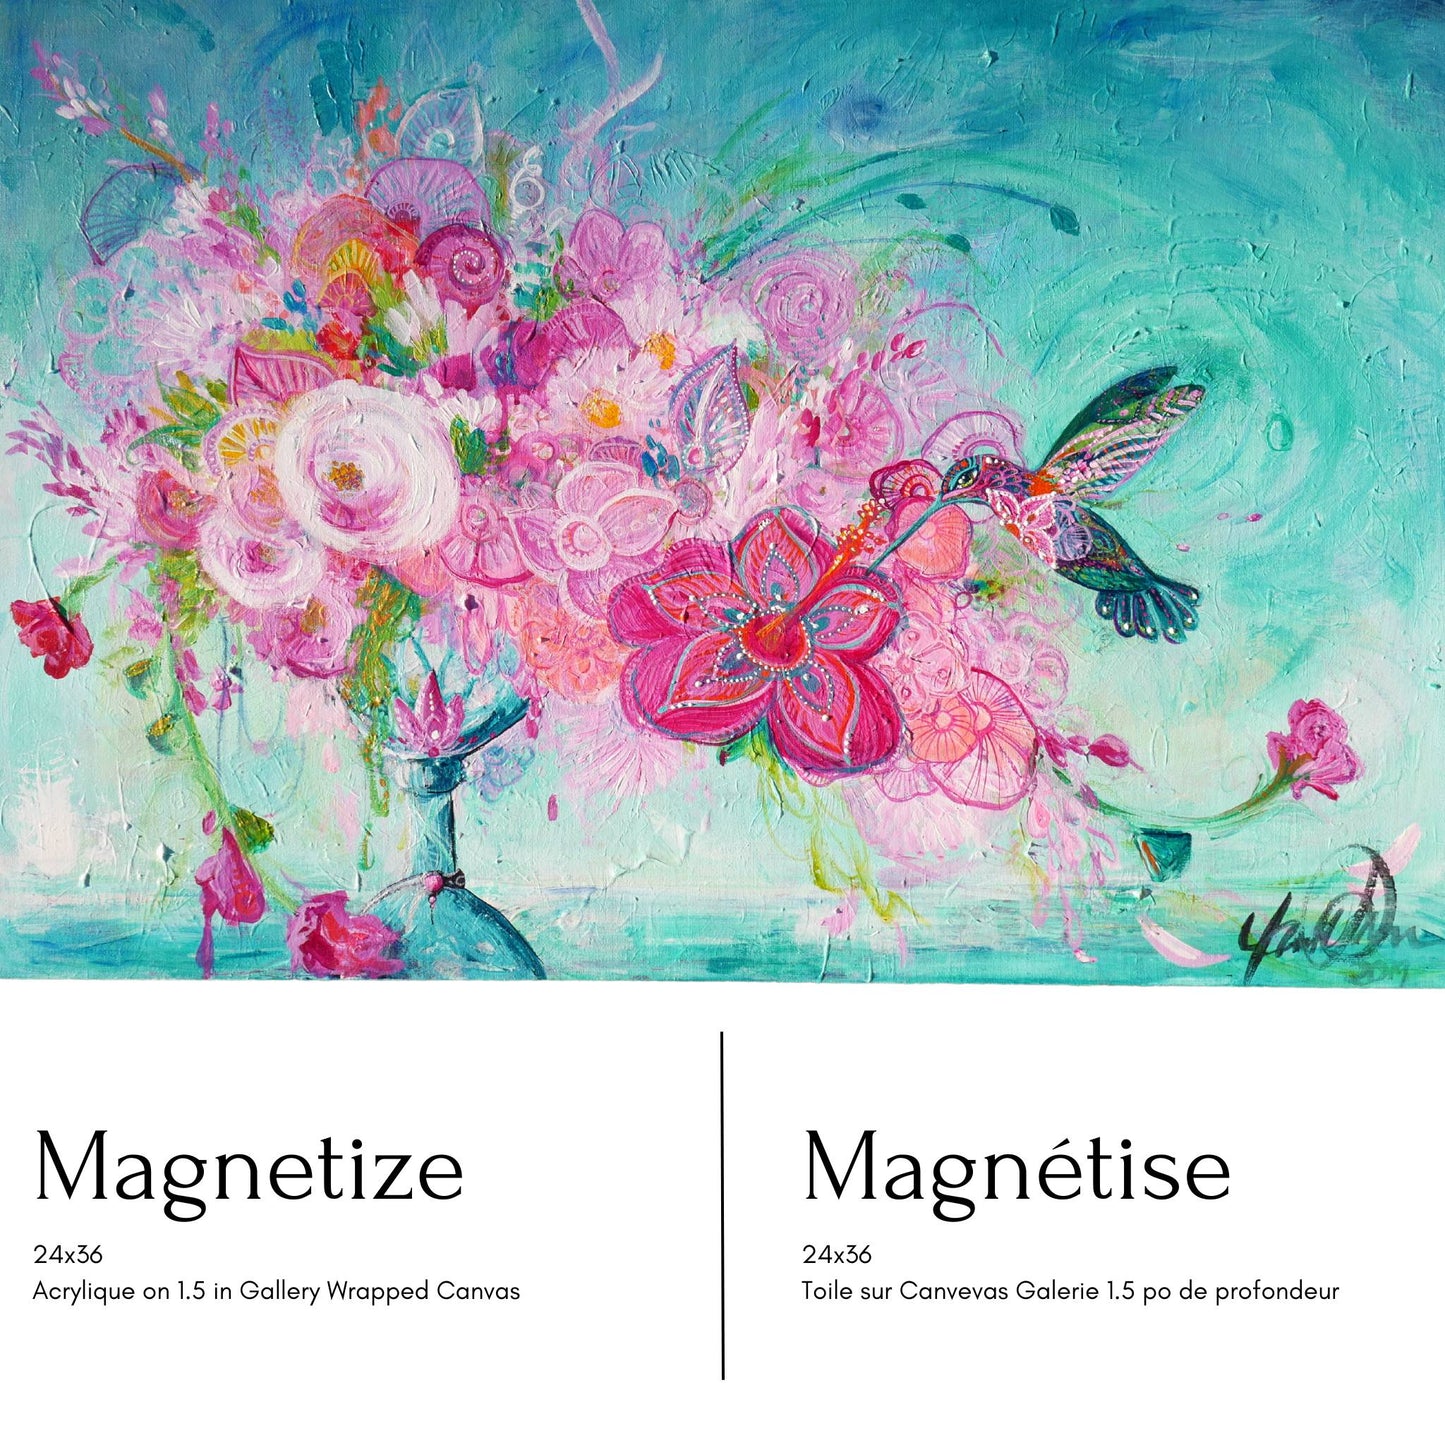 Magnetize : Painting by Contemporary Artist Yanik Falardeau